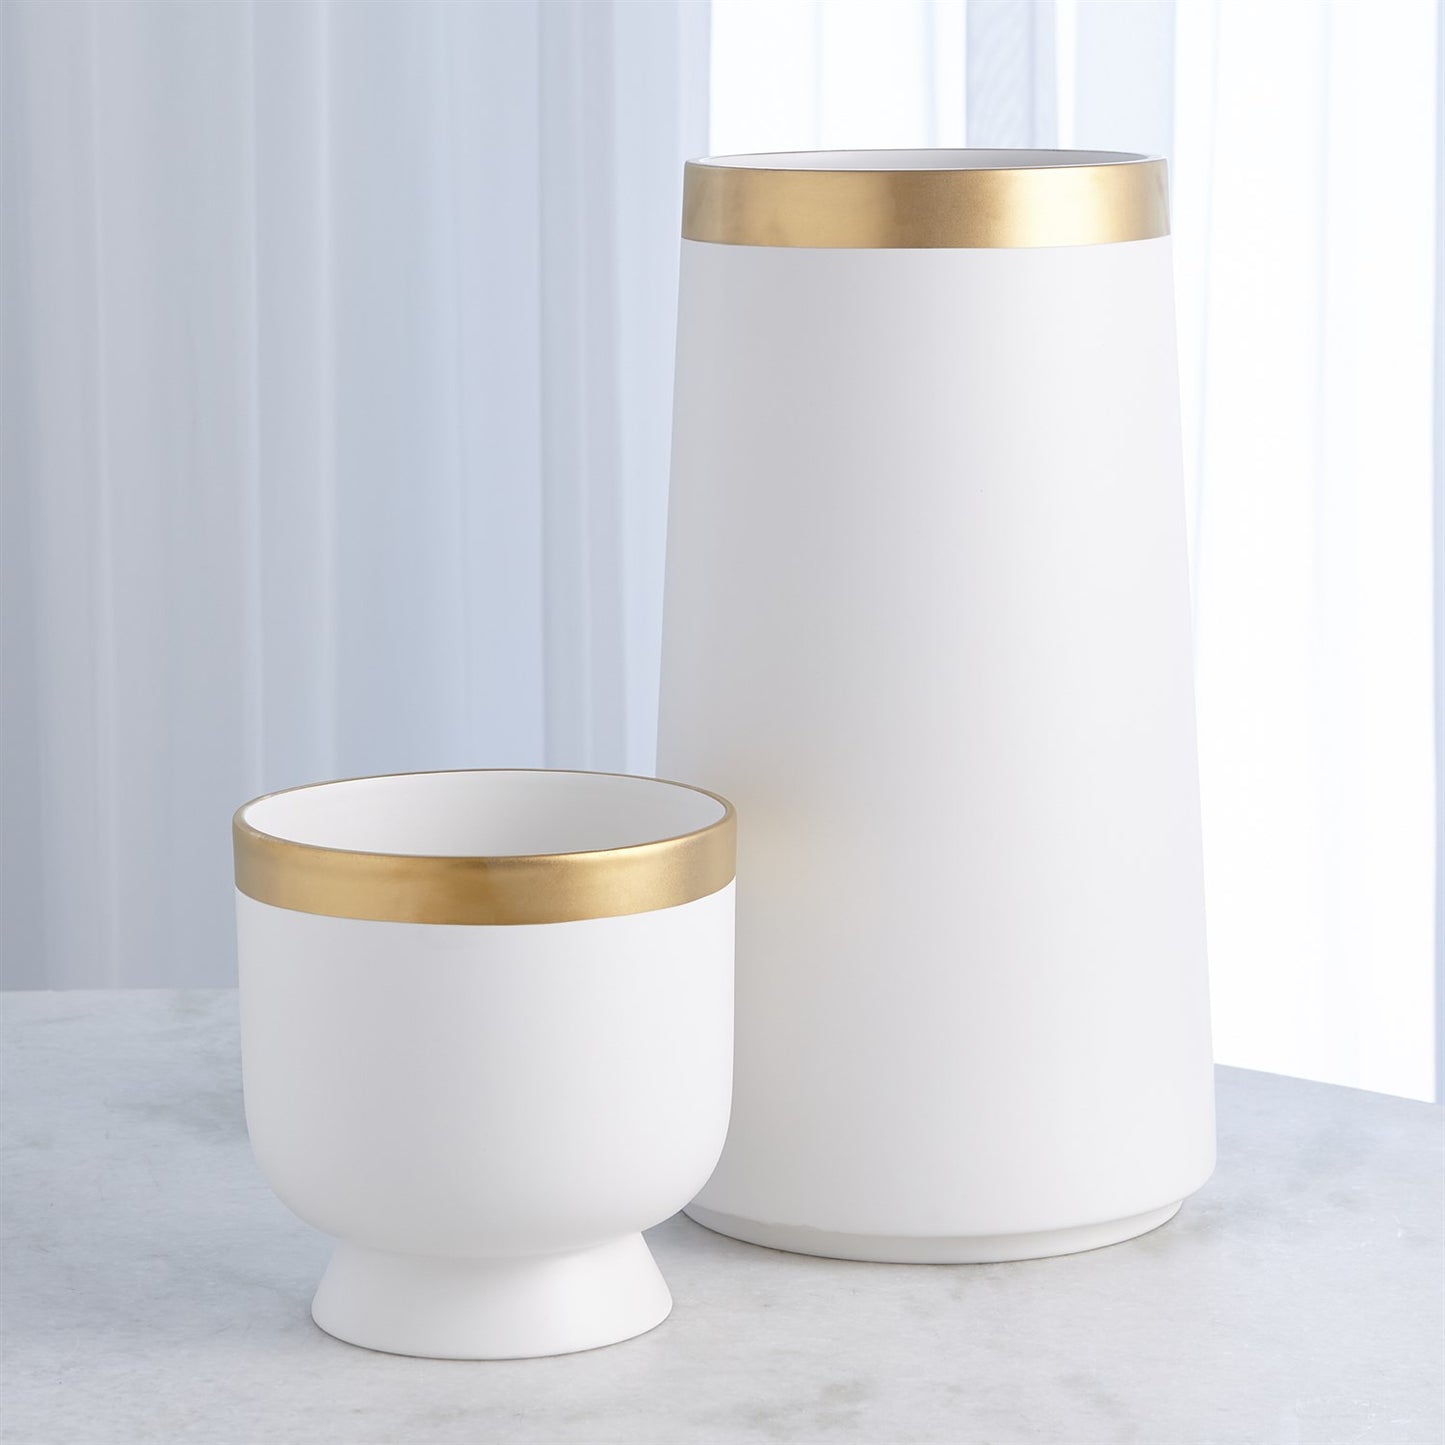 Barbara Barry Modern Gold Banded Vase - 2 sizes